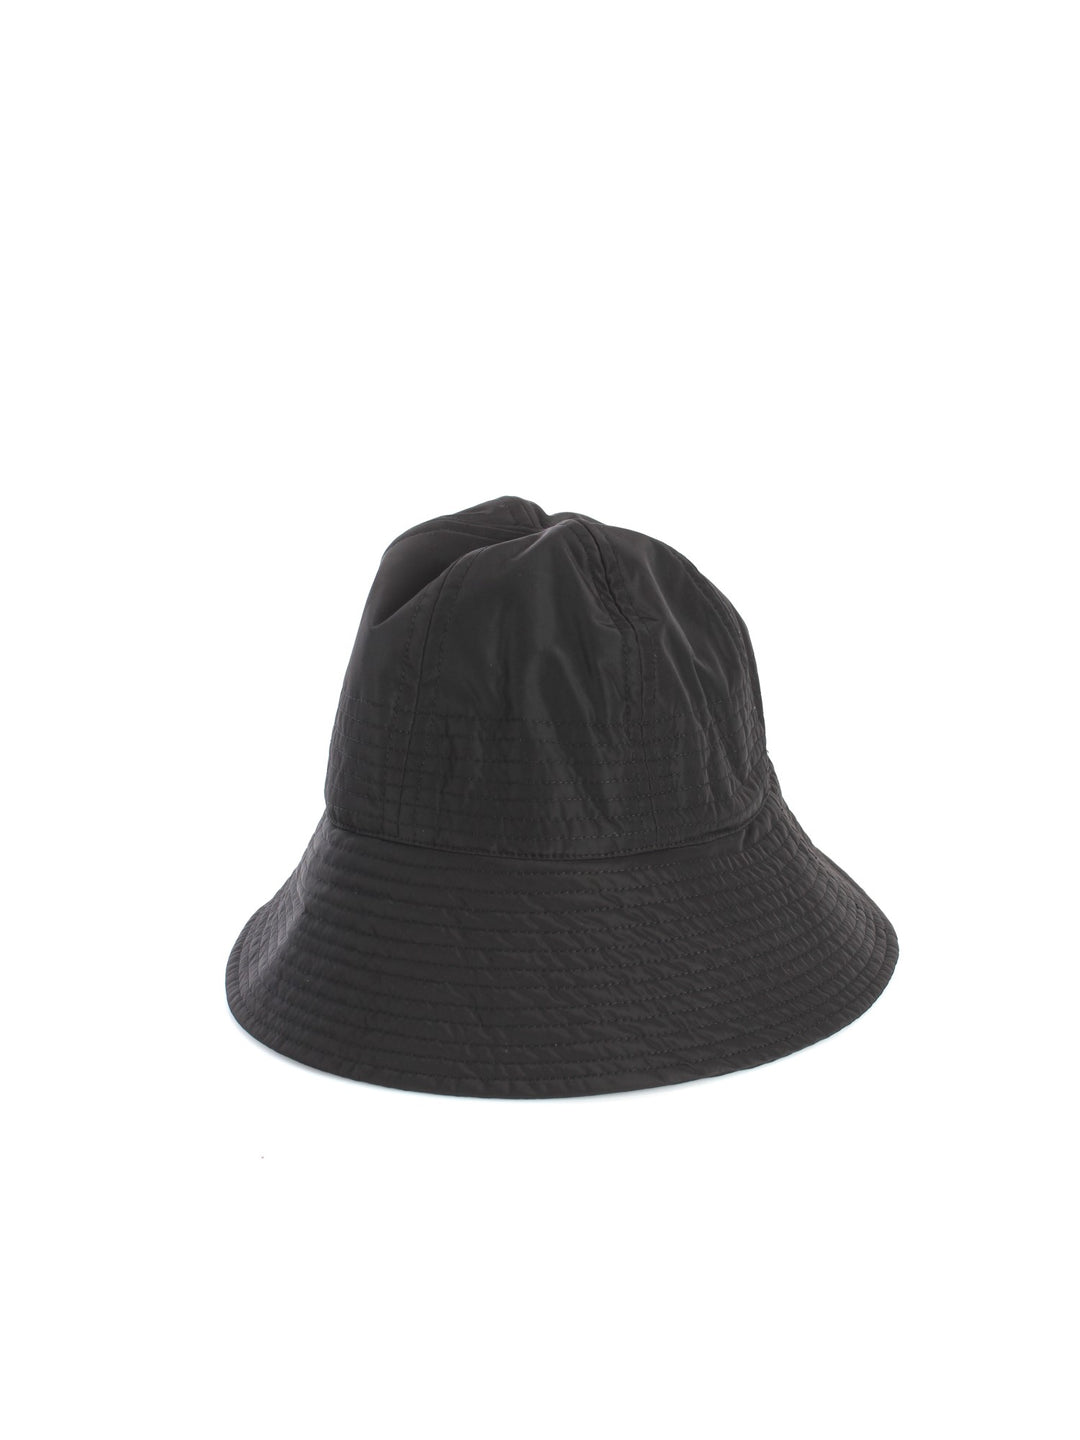 MEIMEIJ I1/M1IV04 Cappello a cloche impermeabile